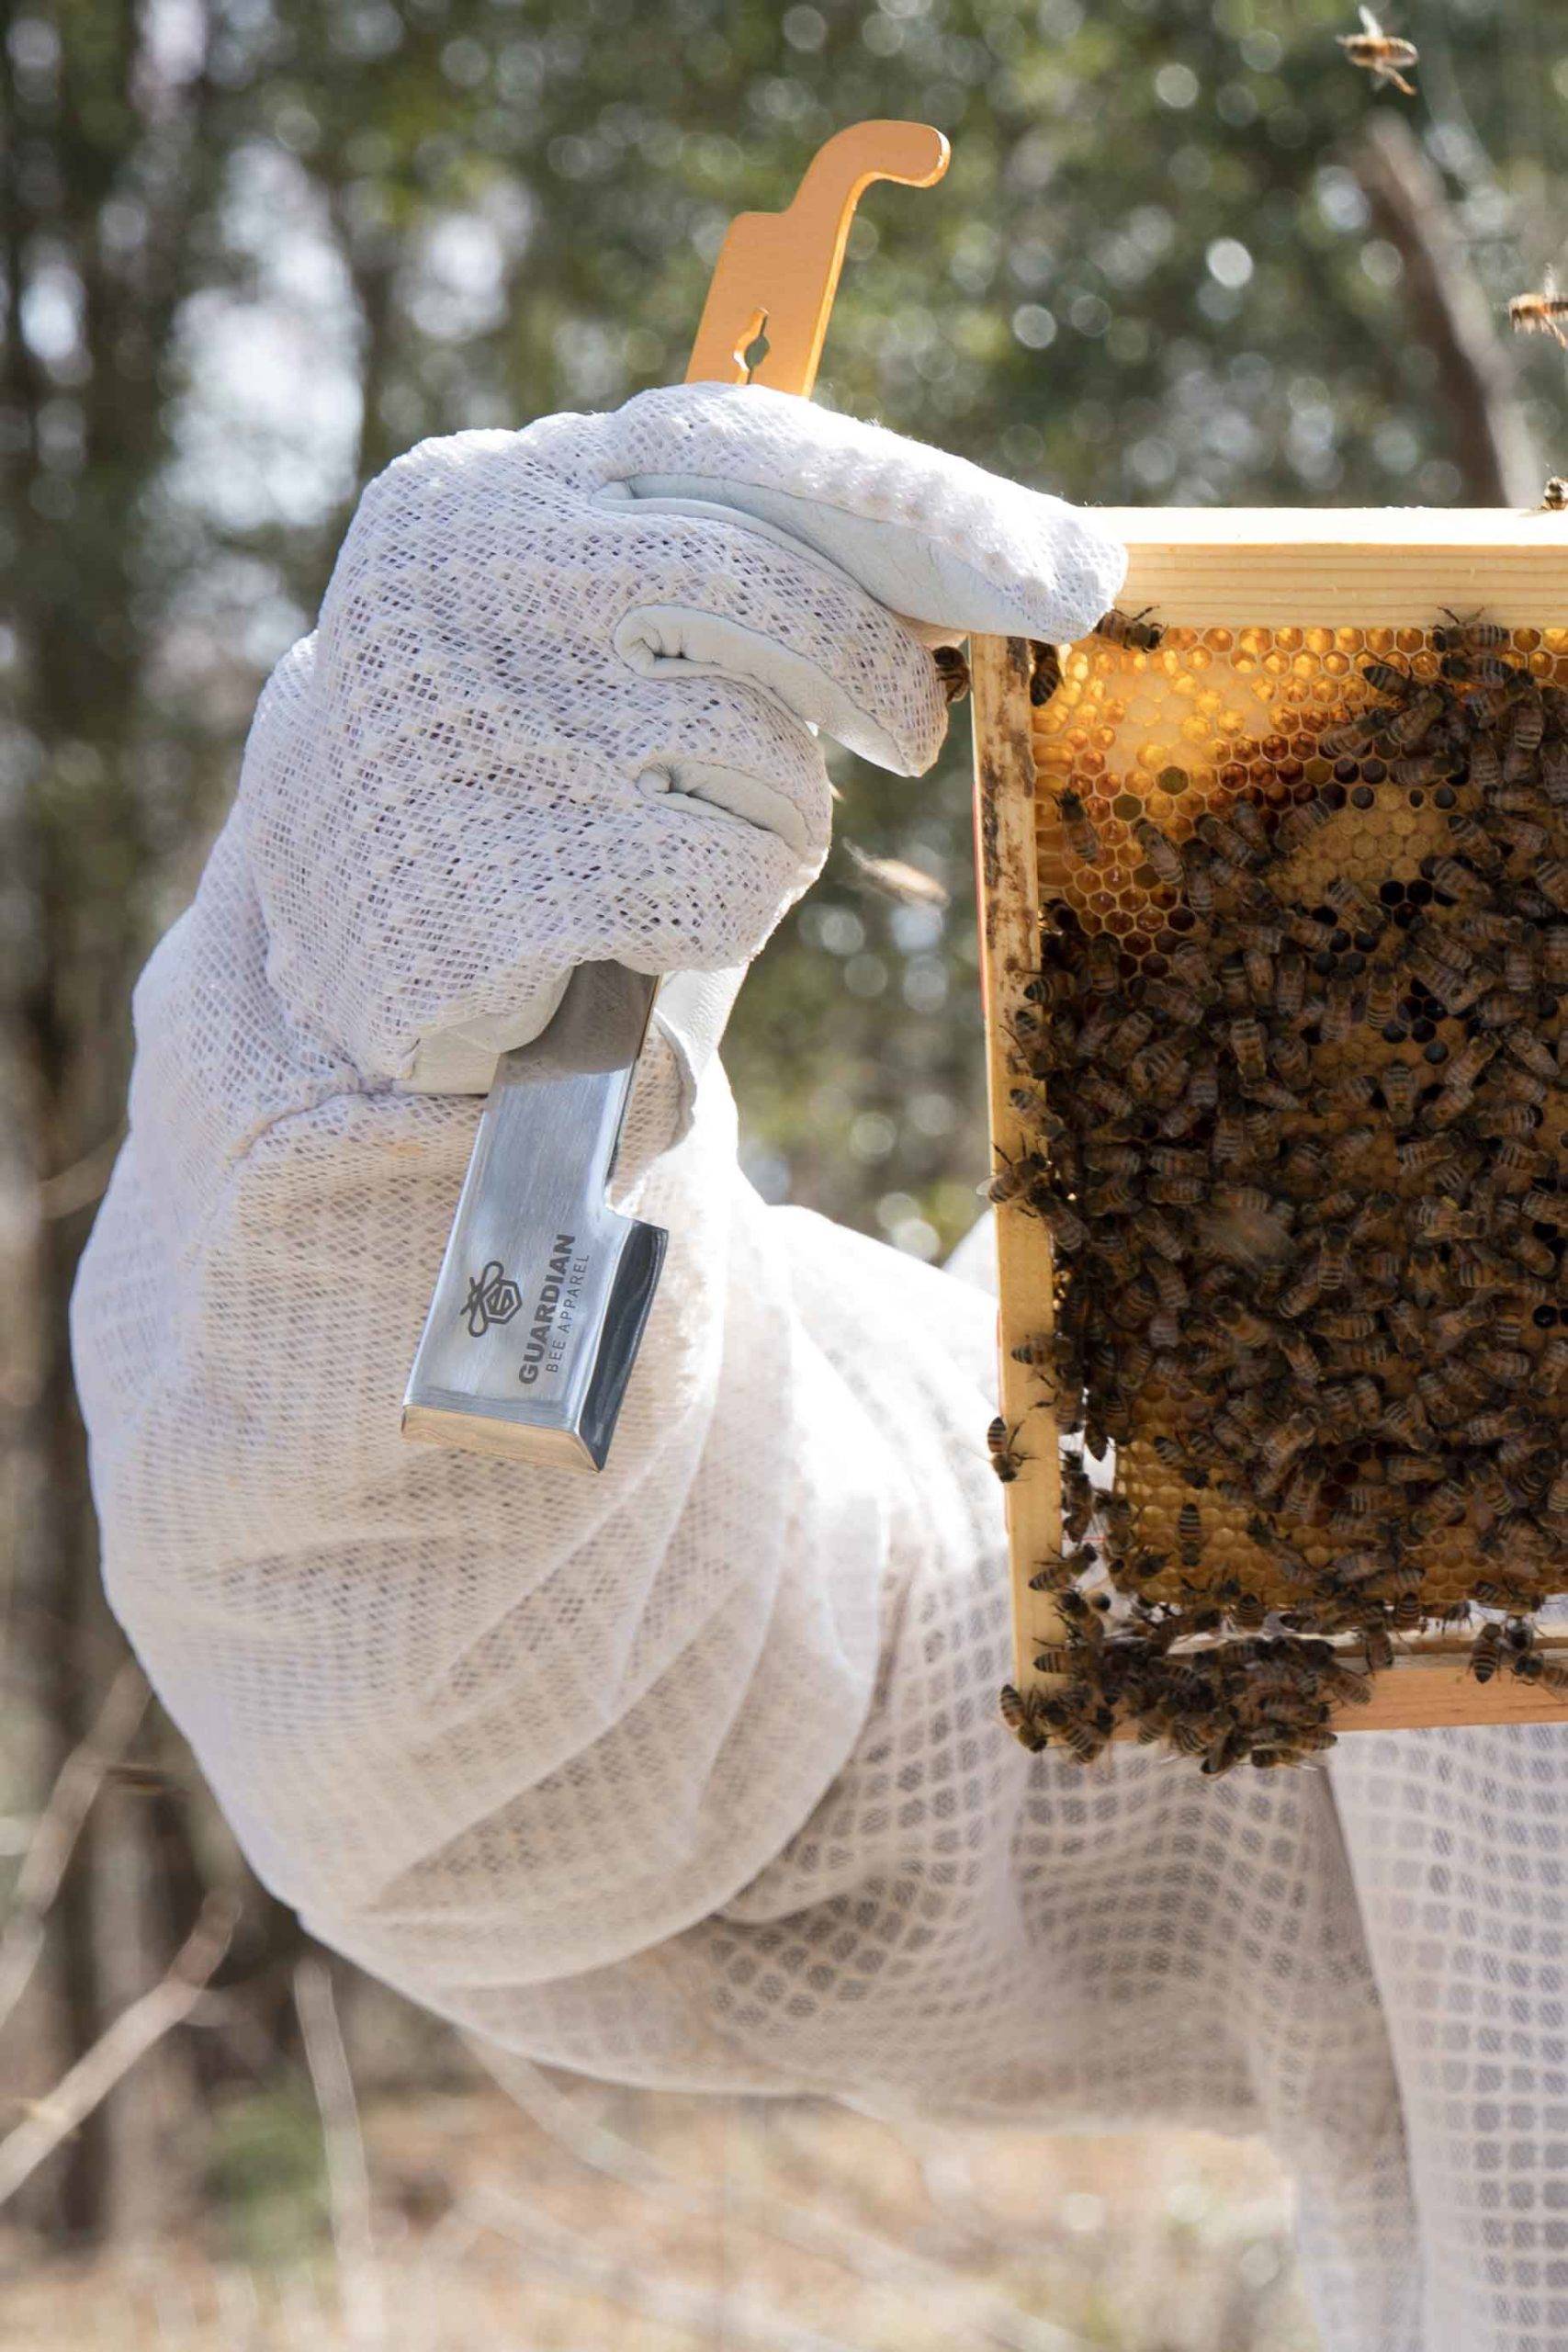 Details about   Beekeeping Protective Gloves Long Sleeves Beekeeper Vented Professional beeh~ hu 